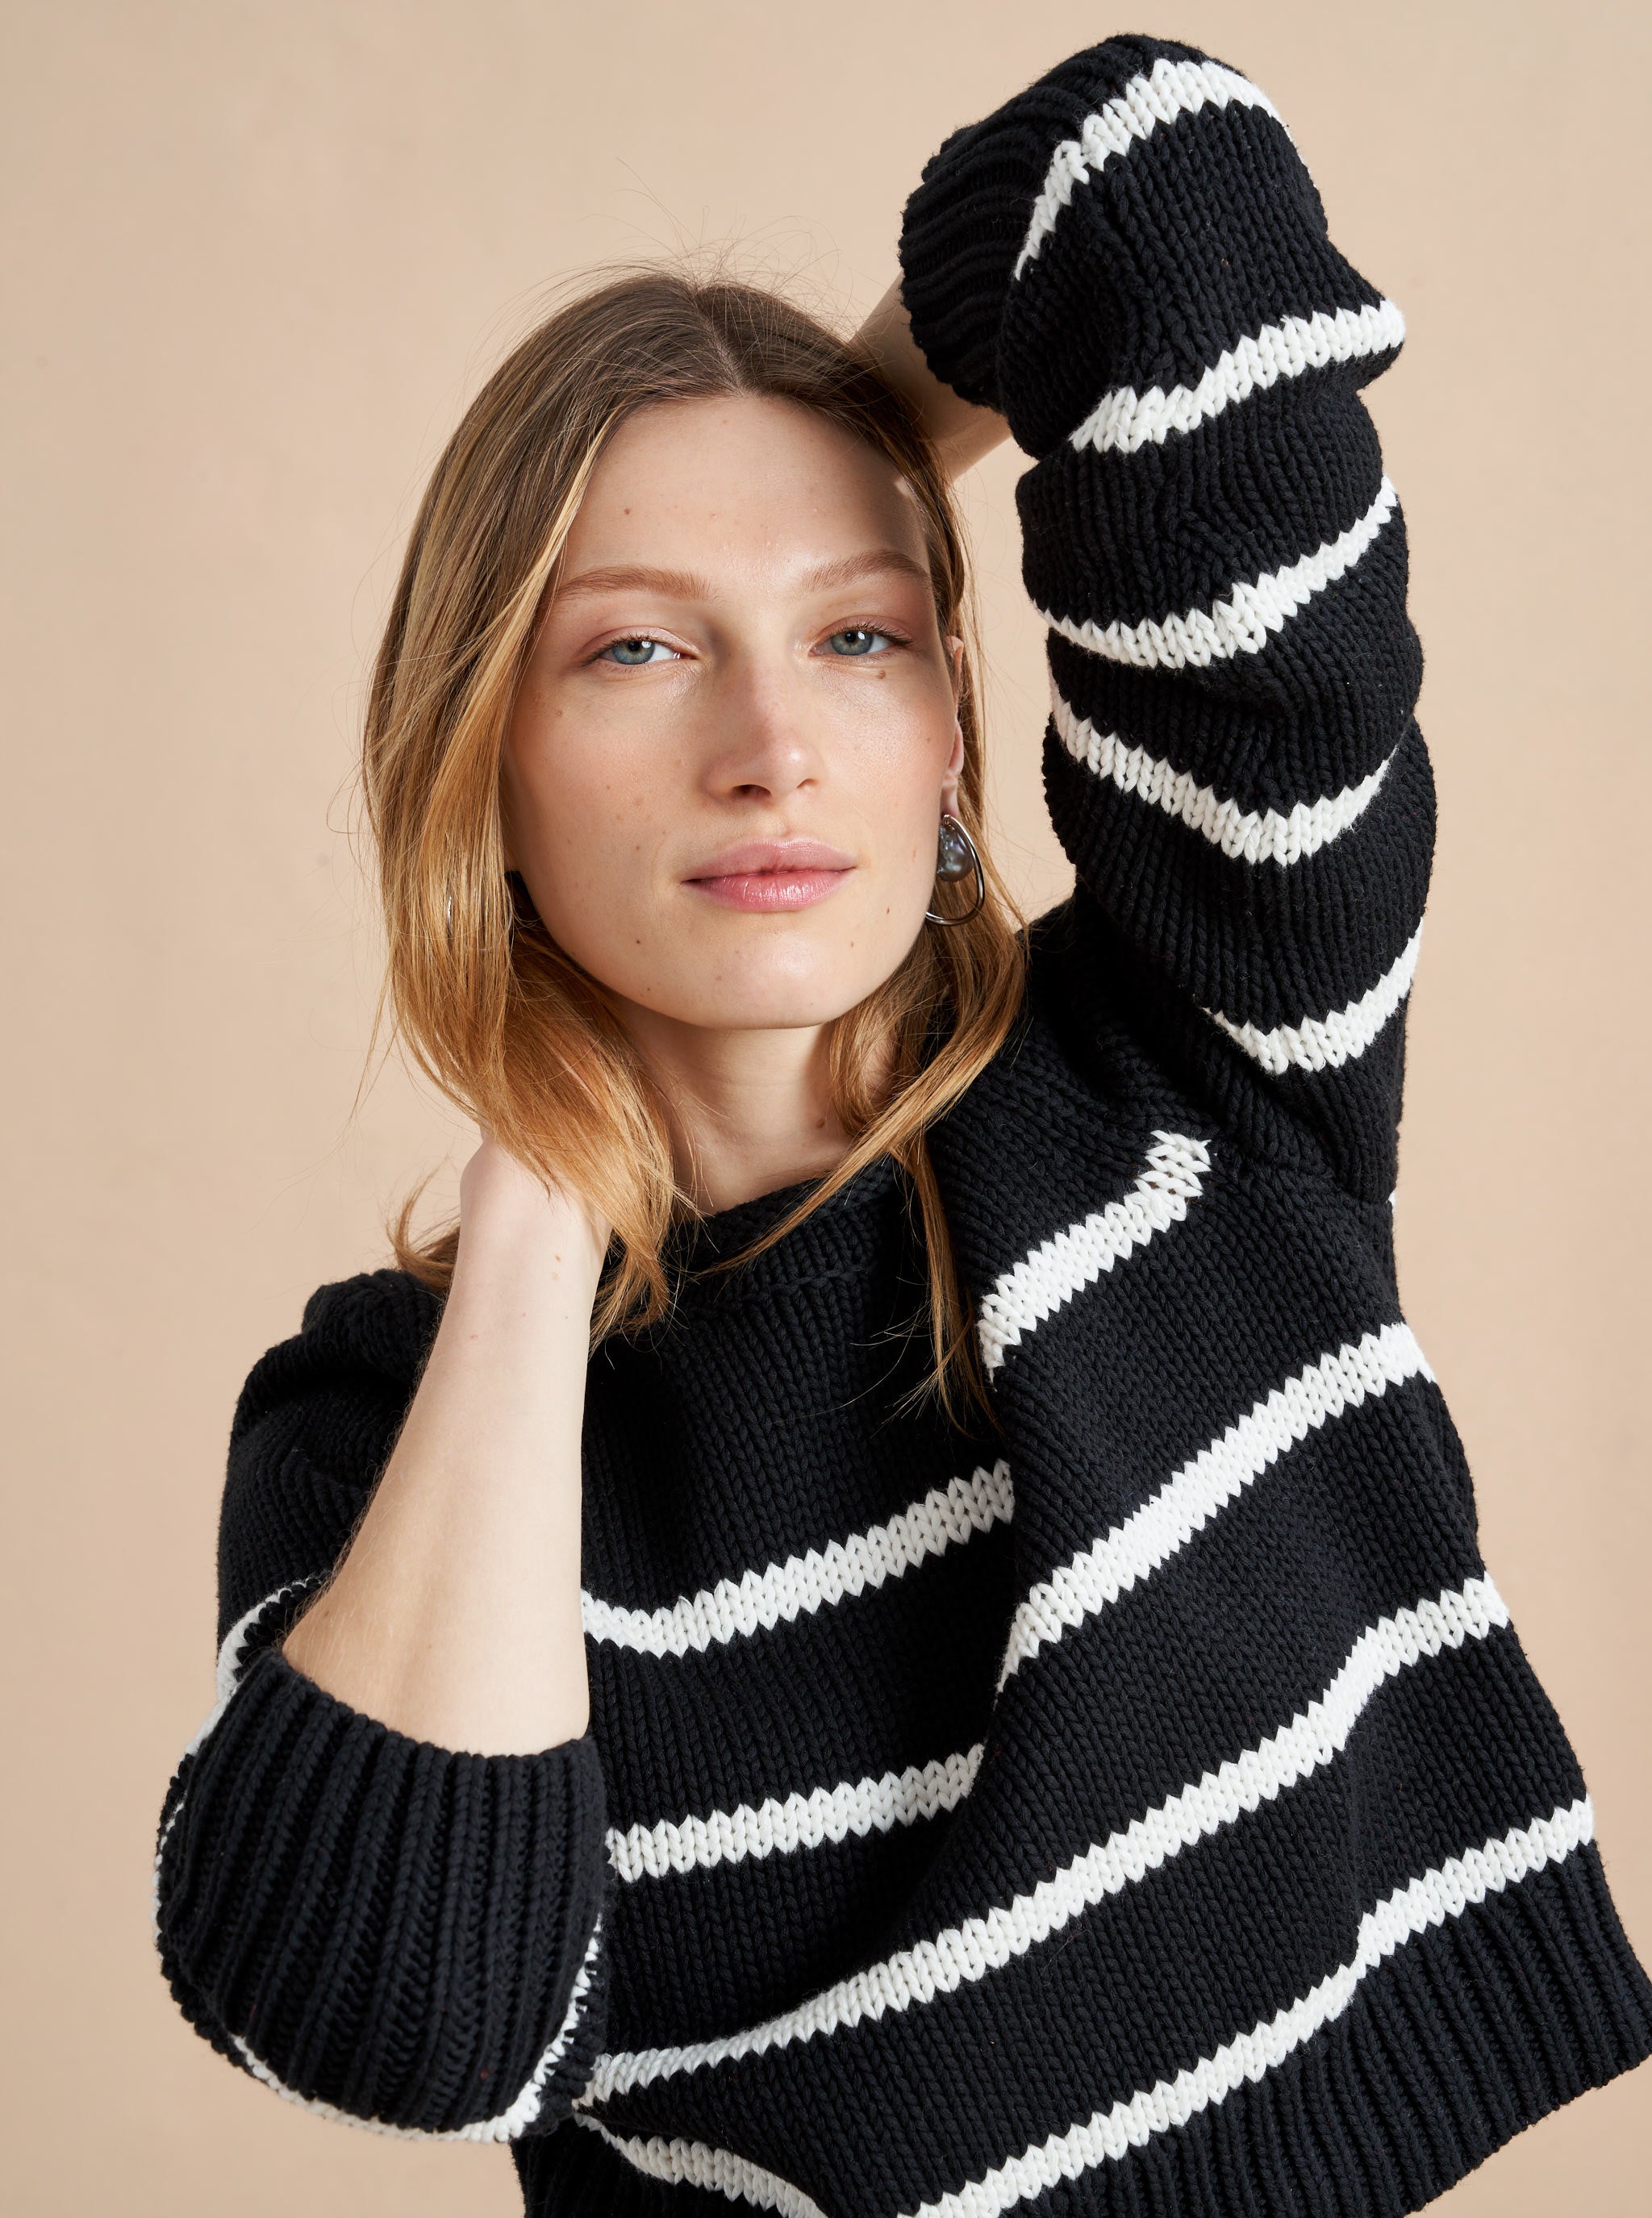 Mini Marina Sweater - La Ligne